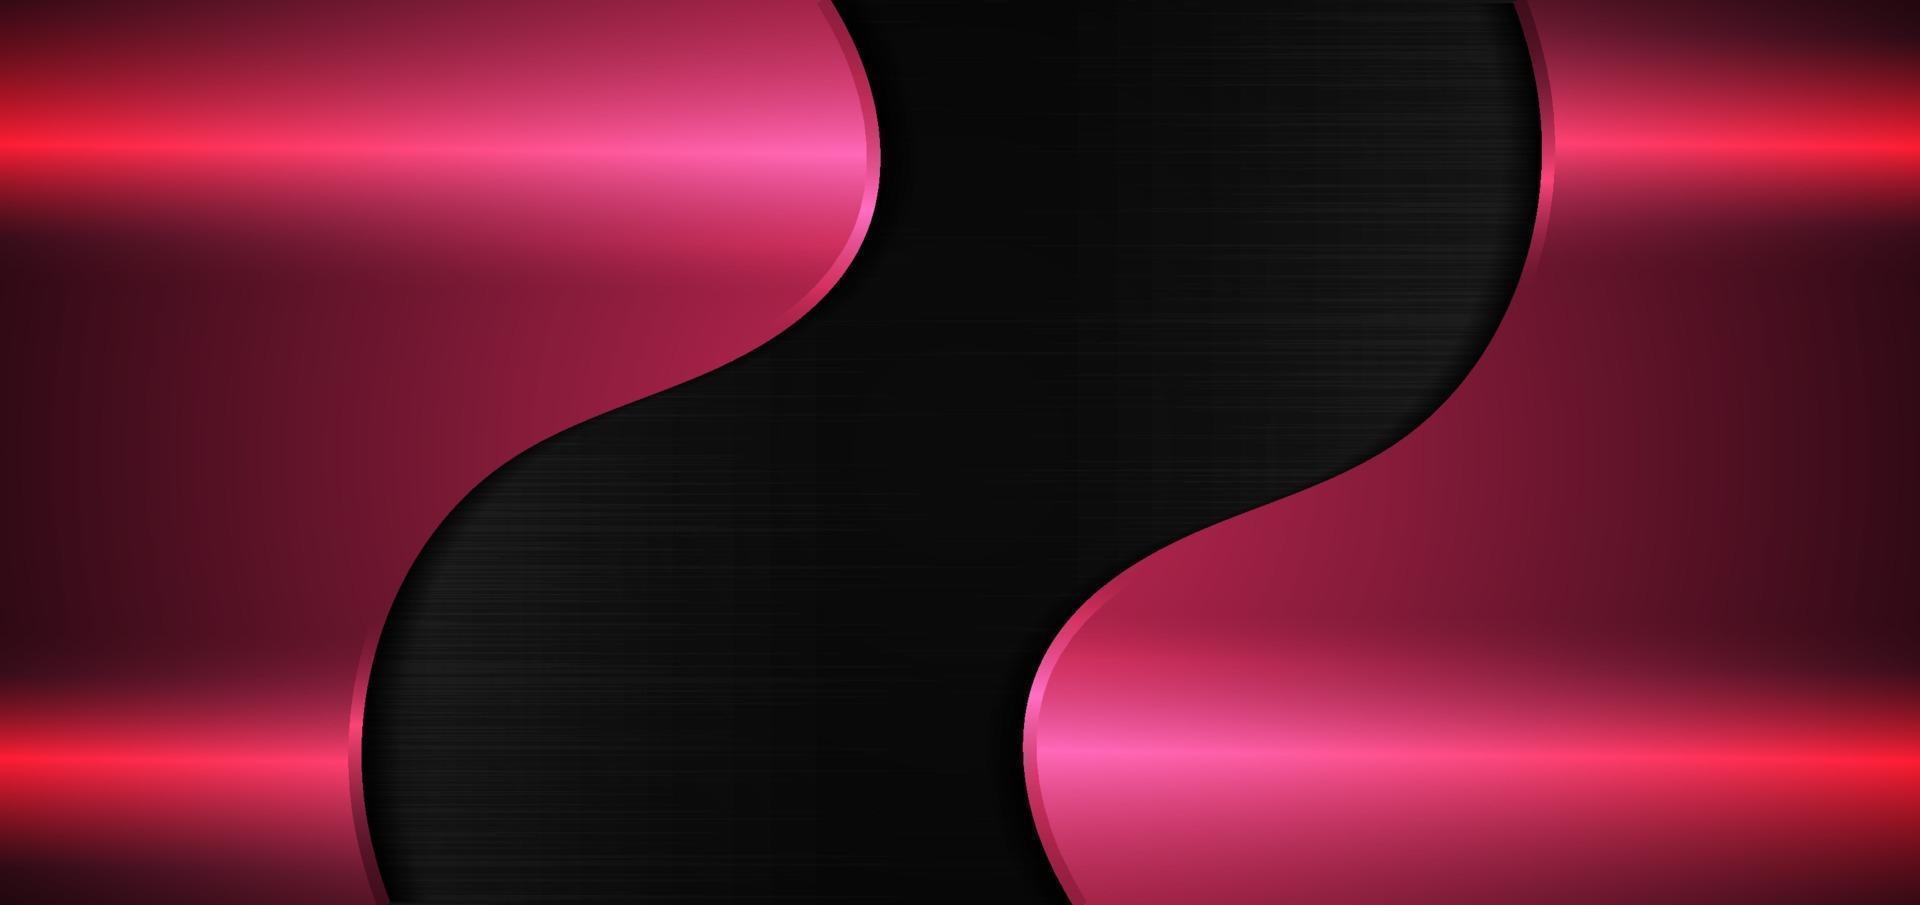 Plantilla abstracta ola rosa sobre fondo negro metal. vector